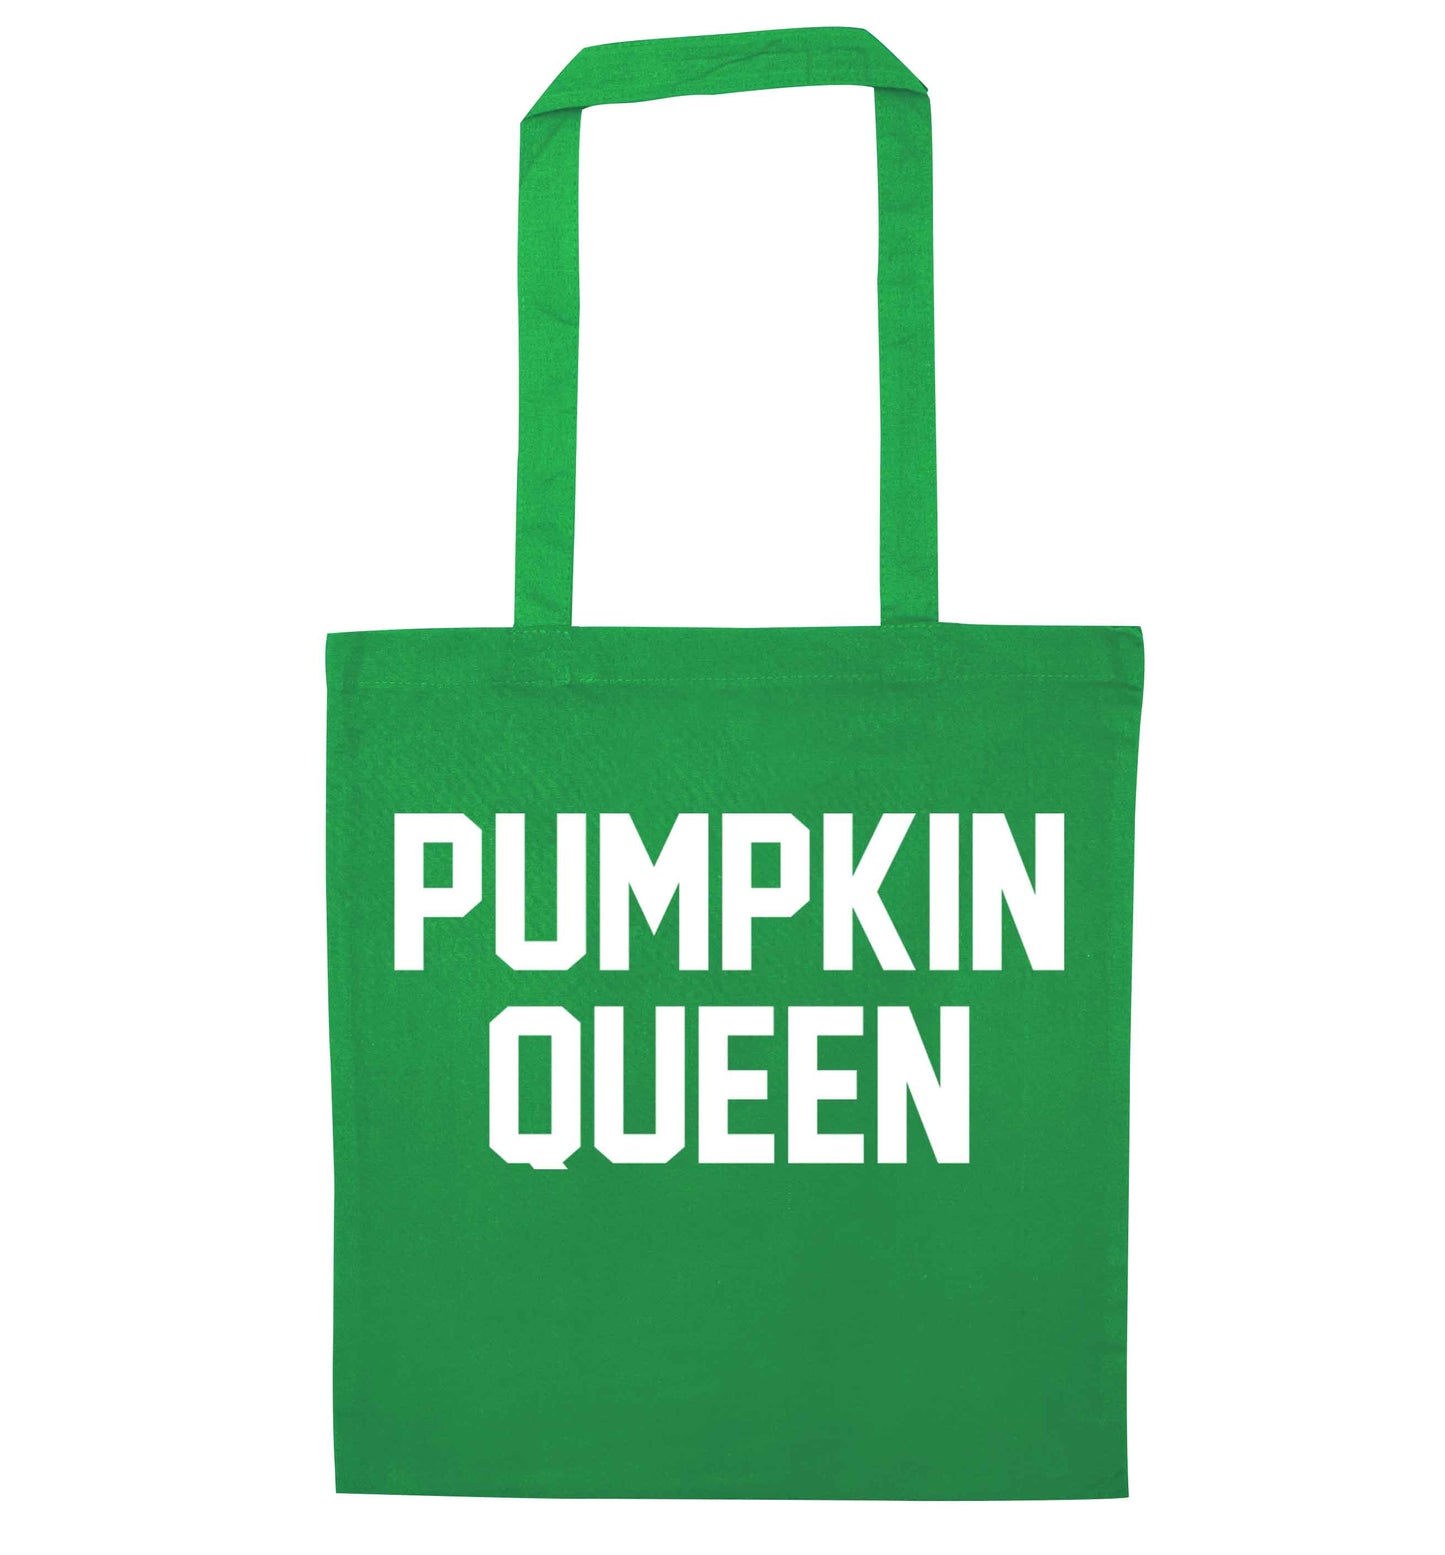 Pumpkin Queen green tote bag